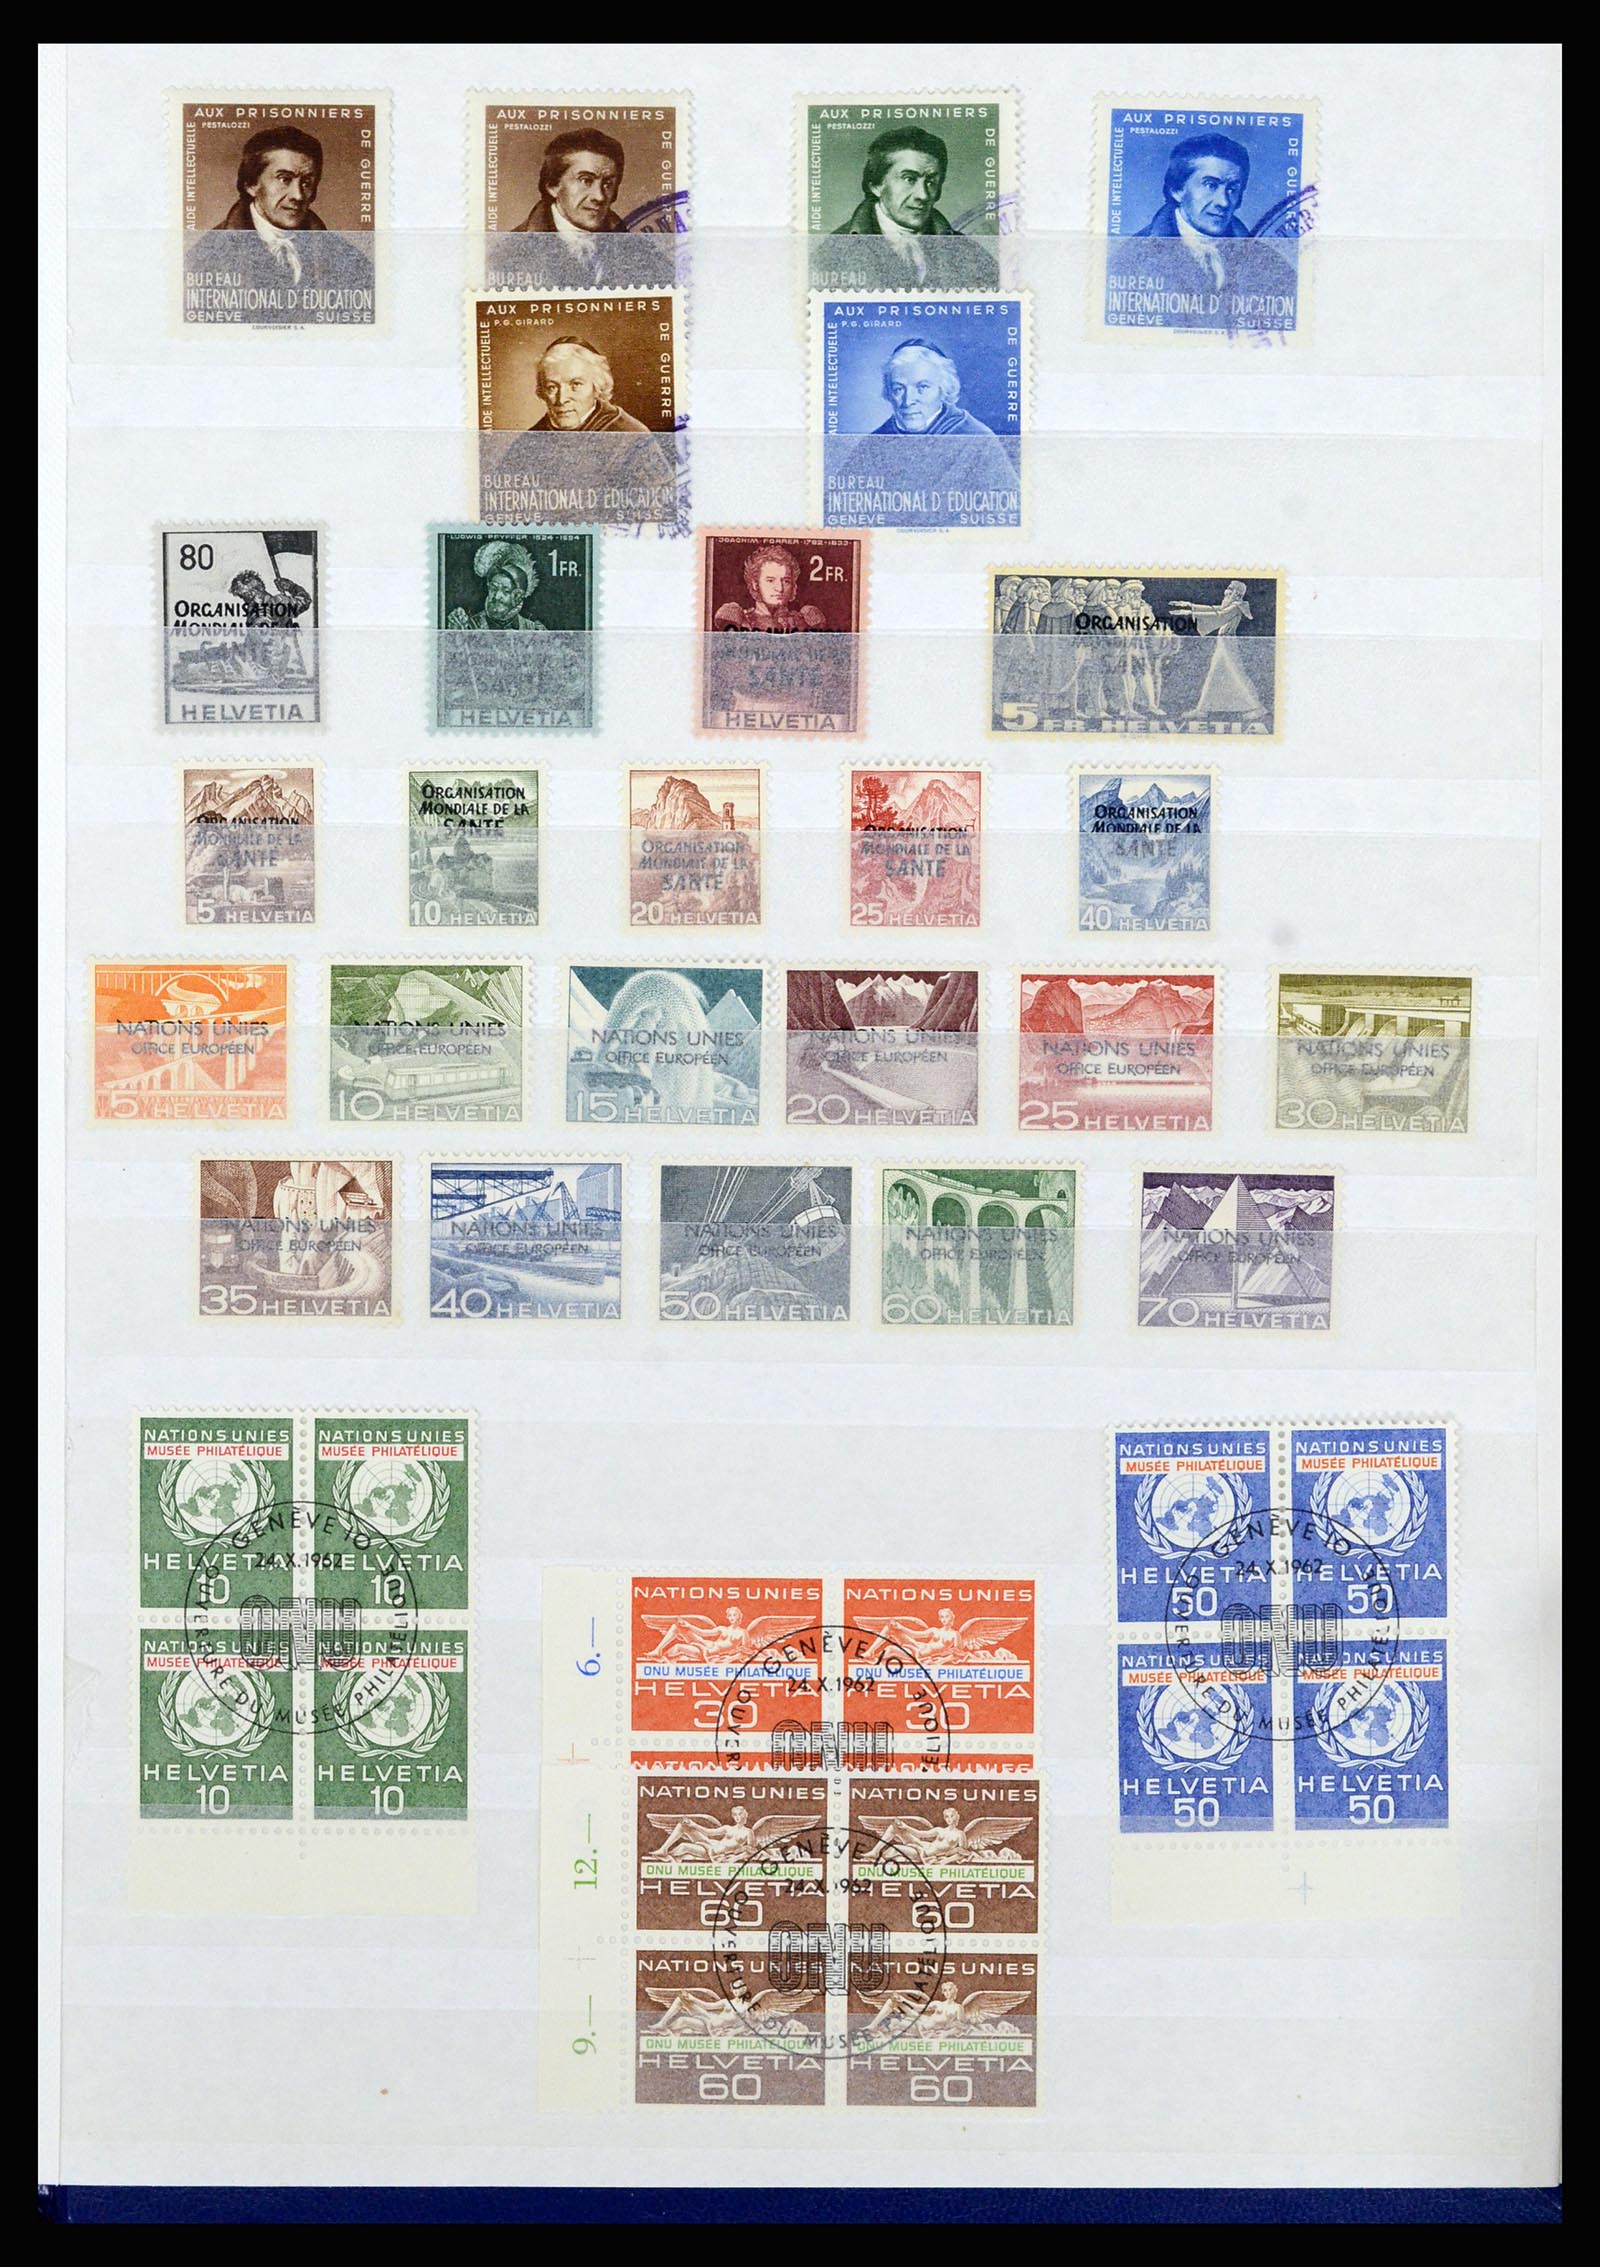 37061 076 - Stamp collection 37061 Switzerland 1913-2000.